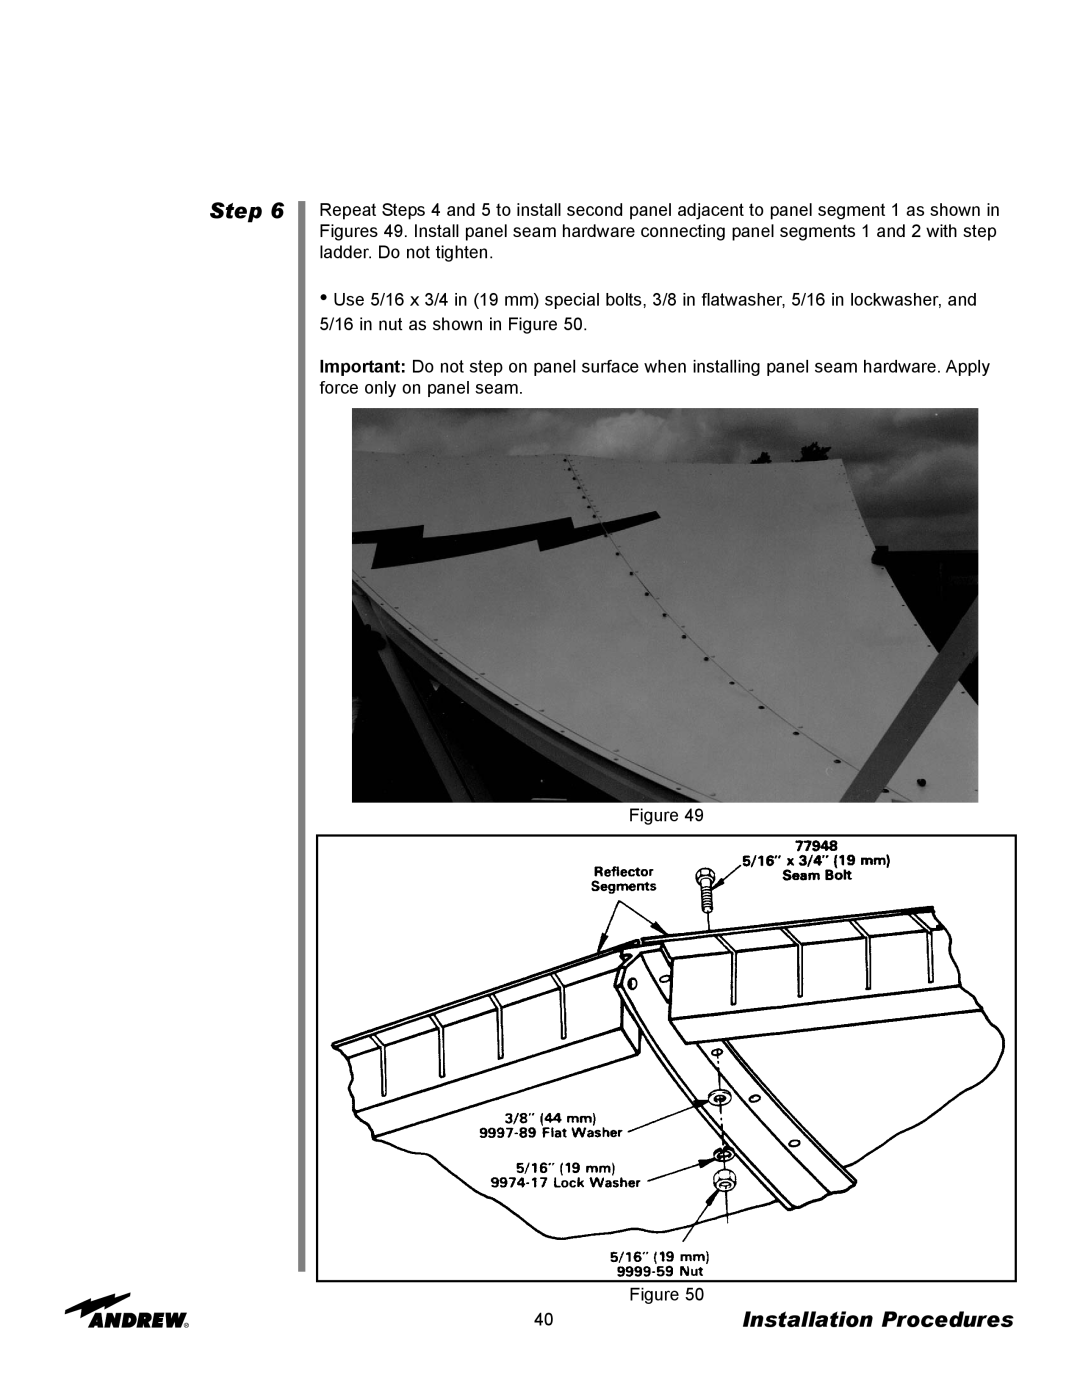 Andrew ES73 manual Step, Installation Procedures, Figure Figure 